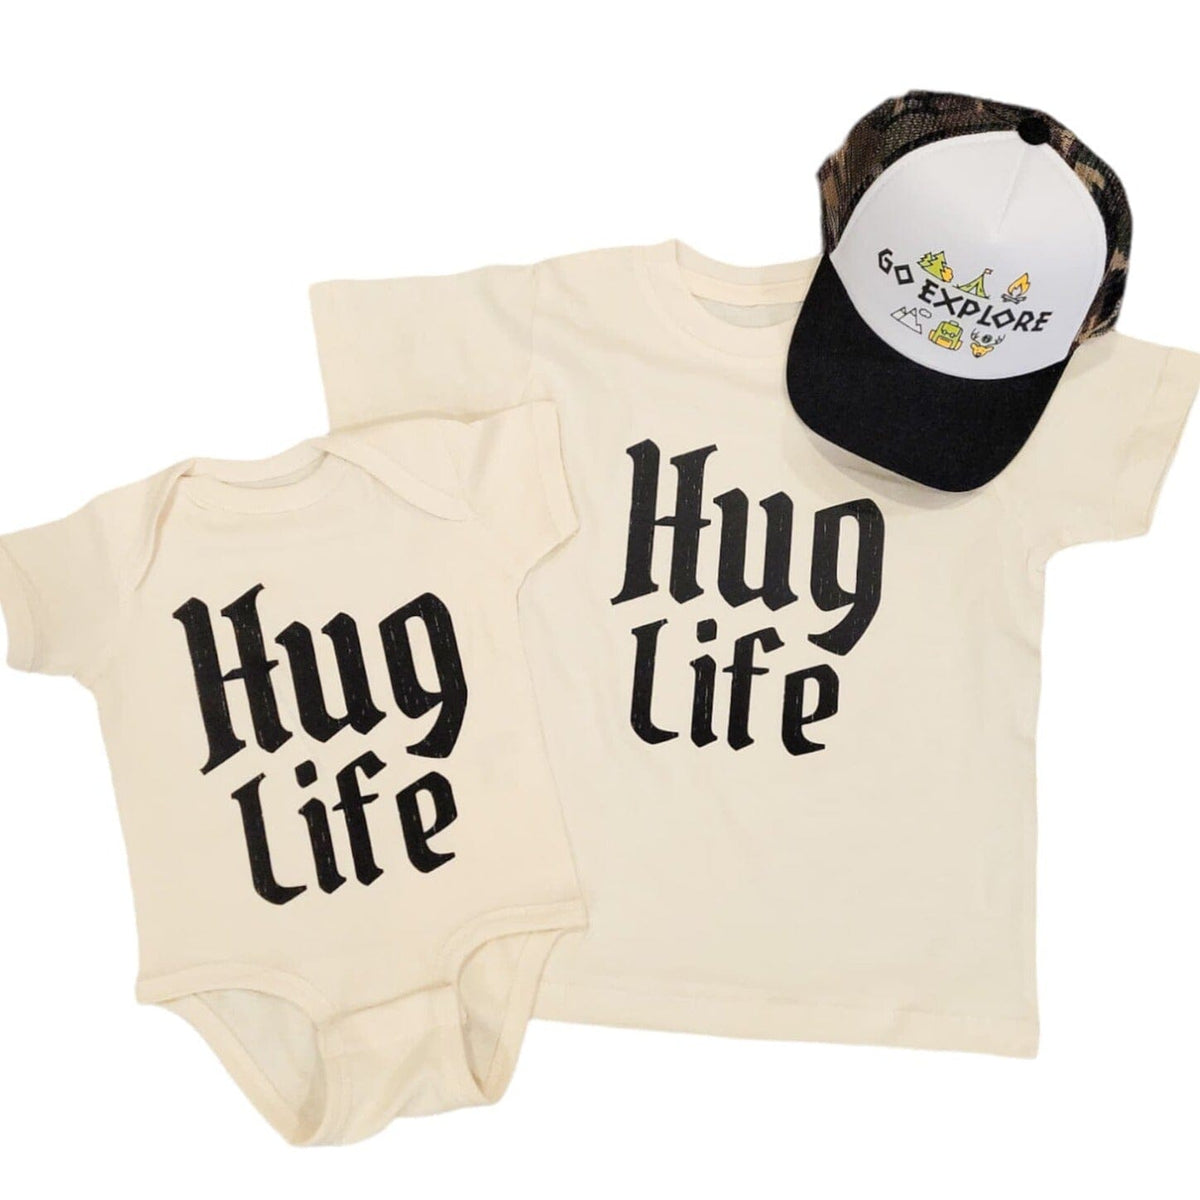 Hug Life Tees